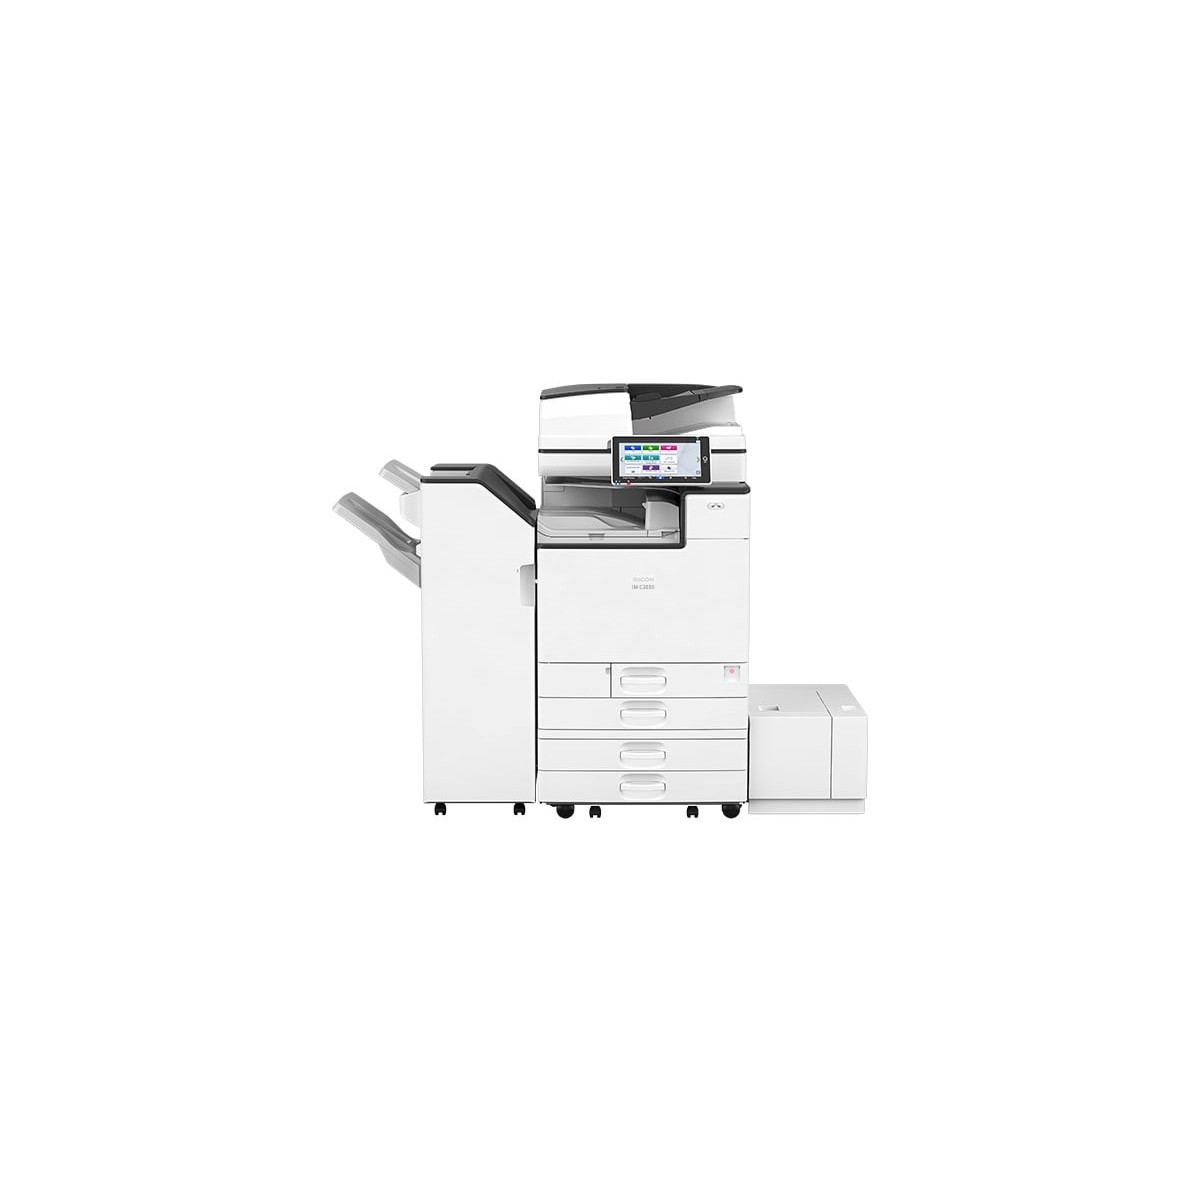 Ricoh IM C3000 - Laser - Colour printing - 1200 x 1200 DPI - Colour copying - A3 - Black - White